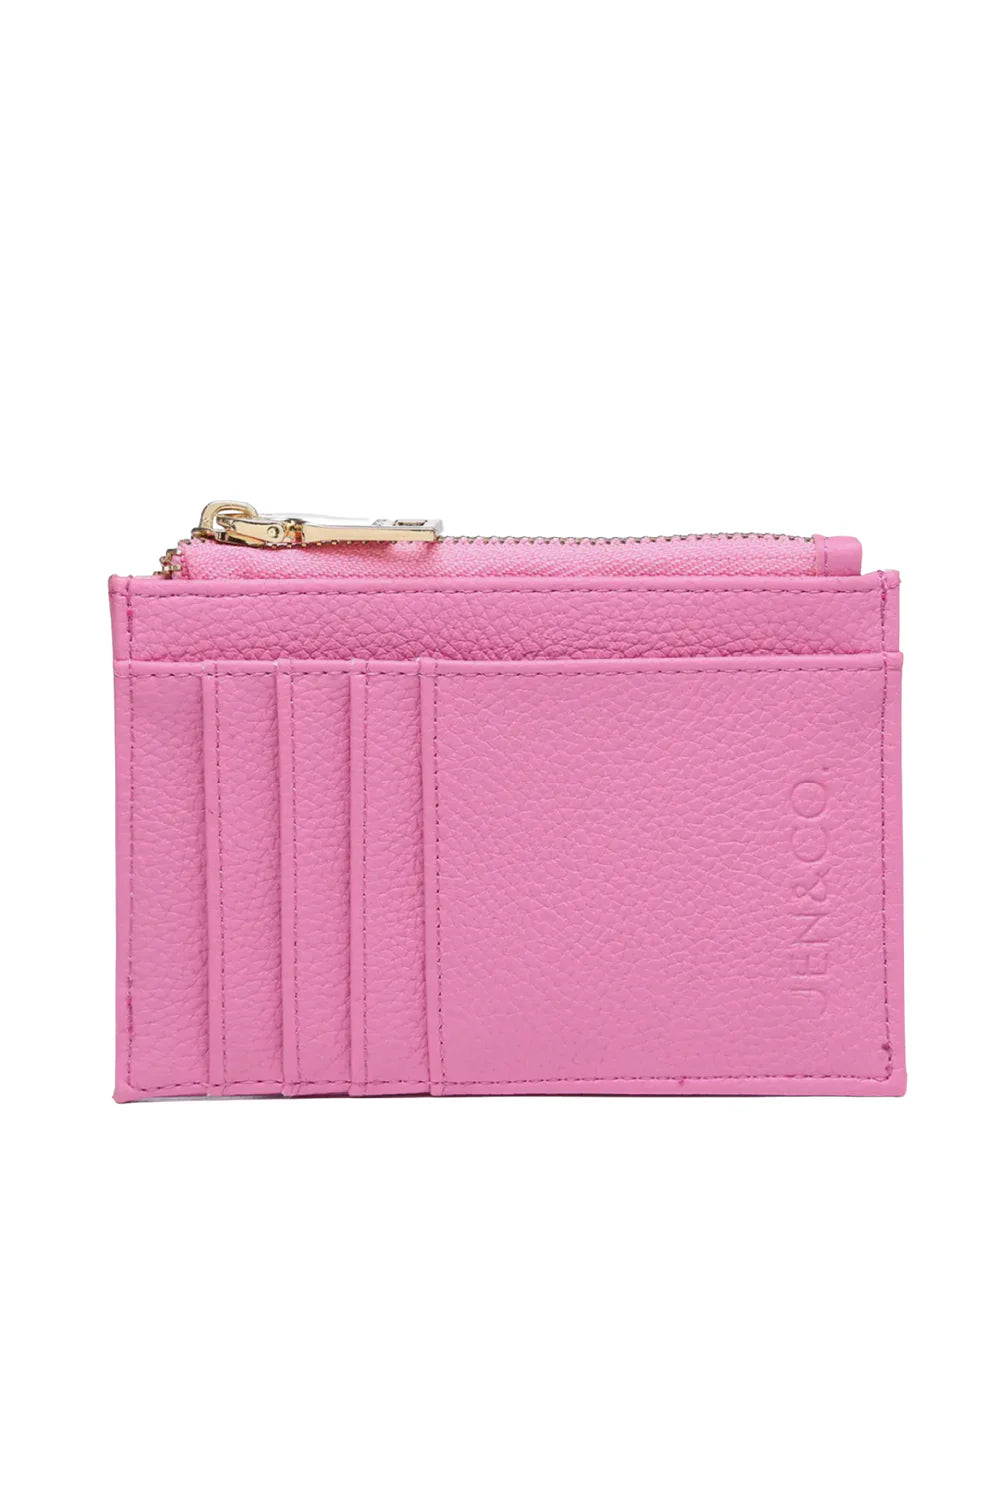 bubblegum pink Sia Card Holder Wallet on a white background.